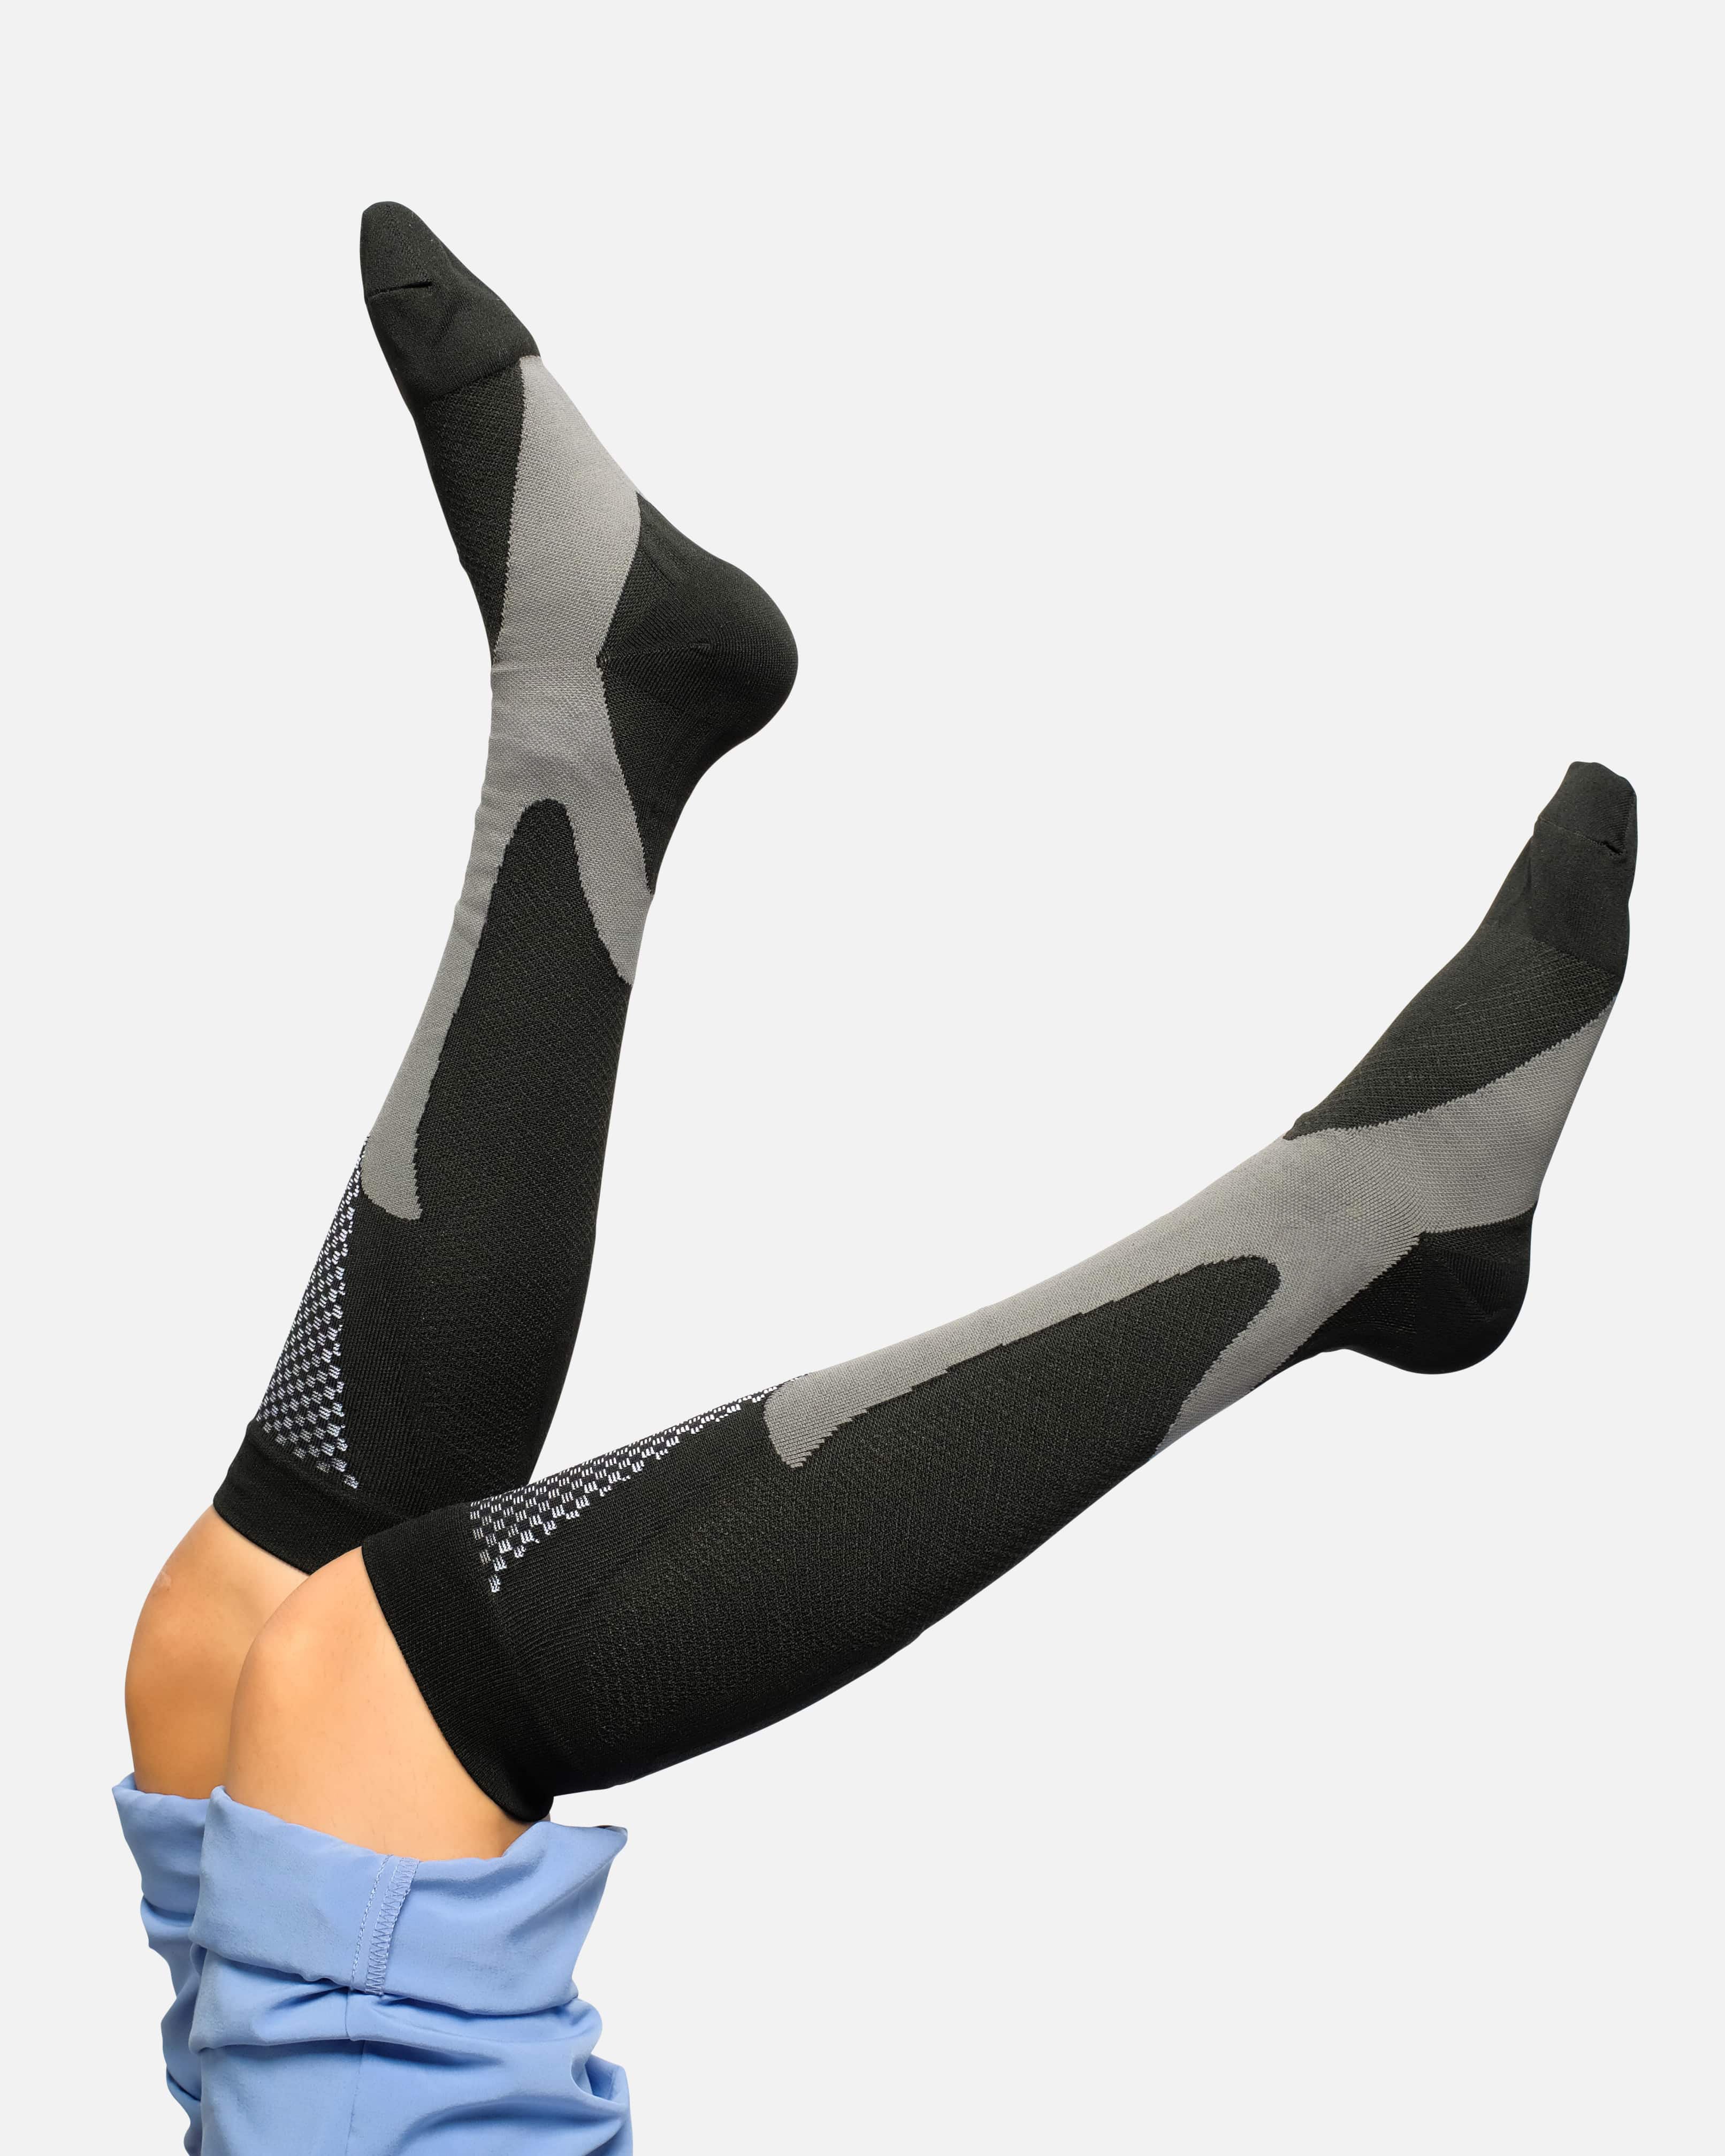 S-XXXL Medical Compression Socks for Varicose Veins, Edema, Swollen or Sore  Legs